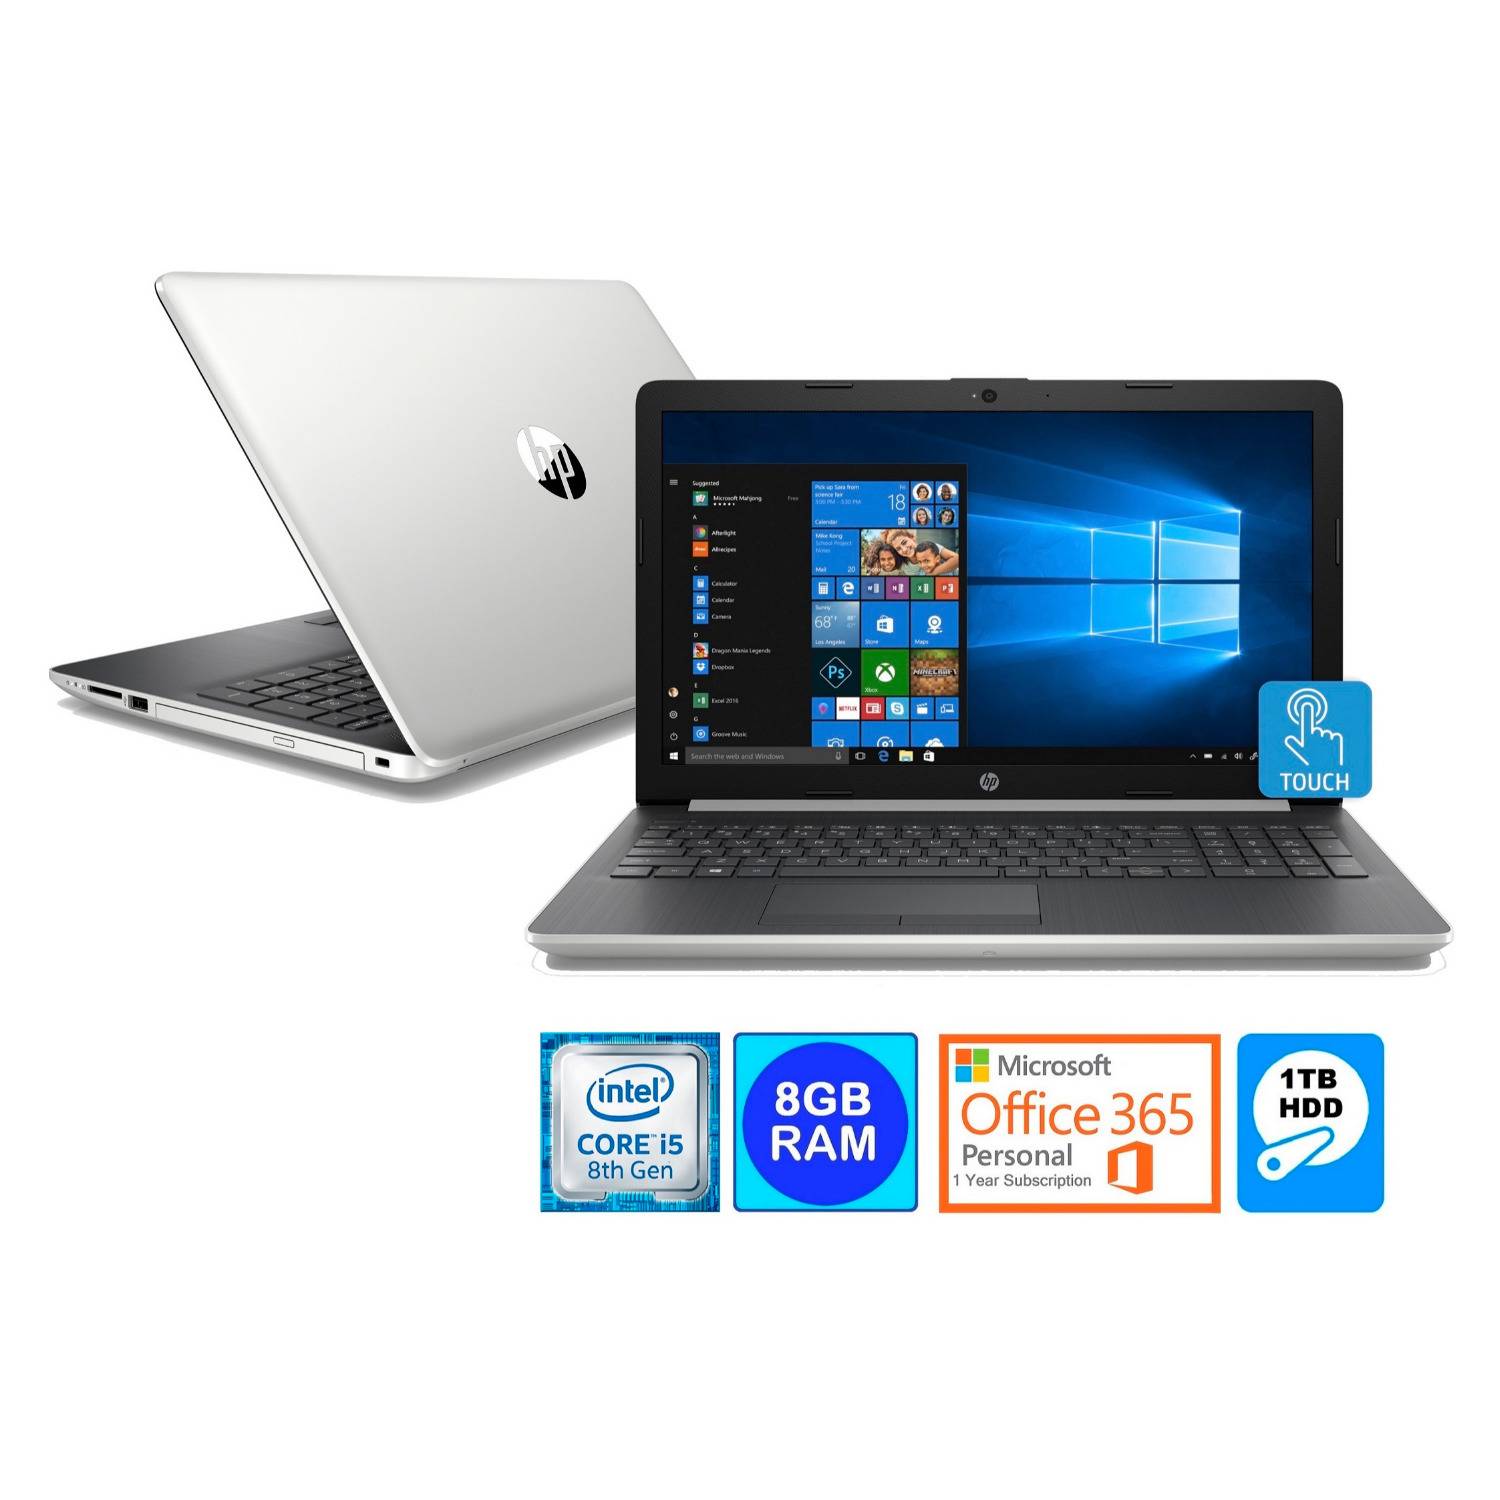 HP 15.6” Touch Screen Laptop Intel Core i5-8250U 8GB DDR4 1TB HDD Microsoft Office 365 Personal 1Yr. (Silver/Ash Silver)